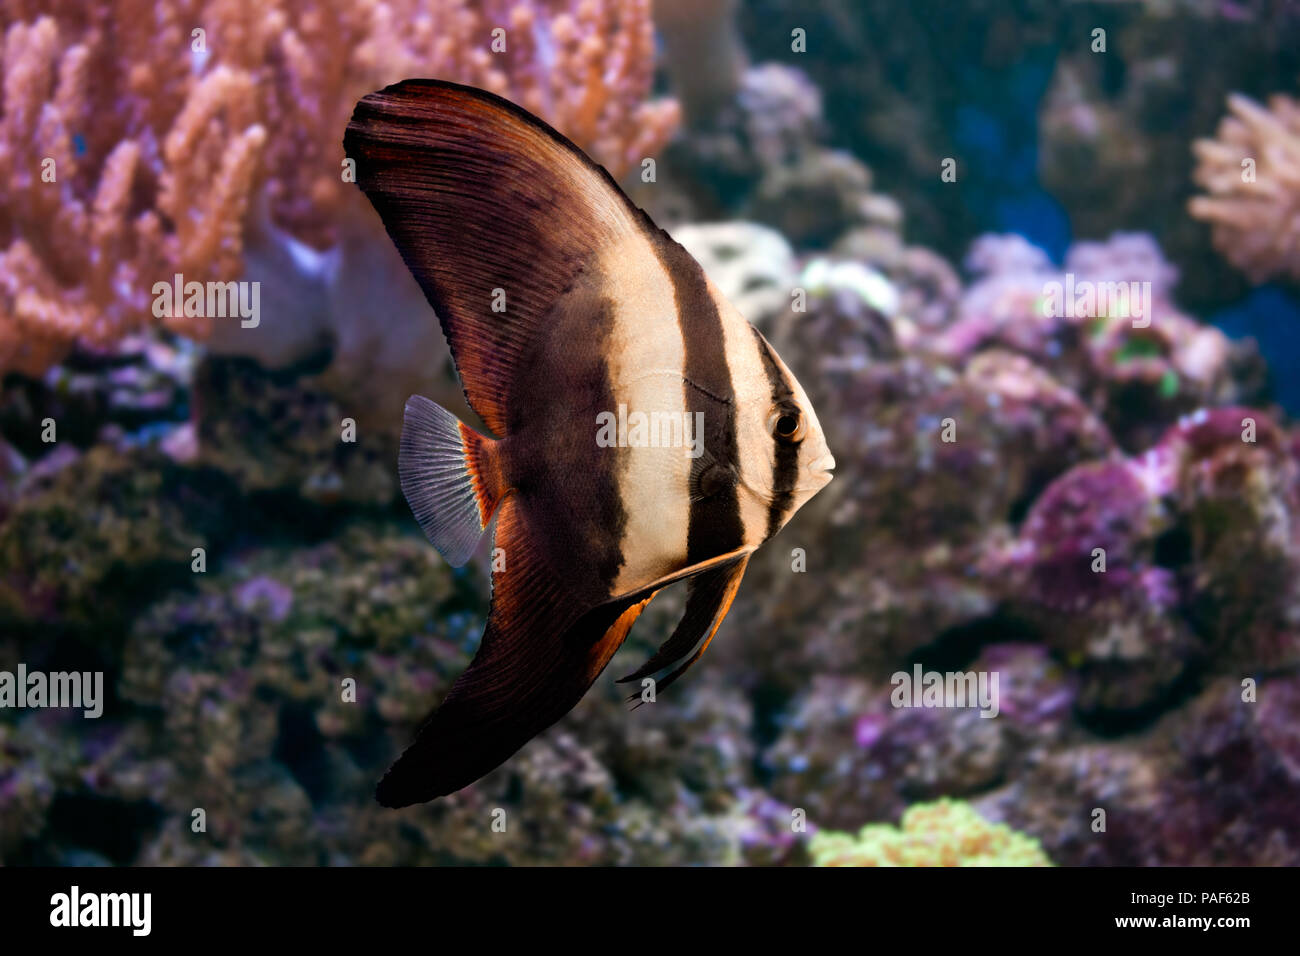 Foto de peces marinos - Batfish Foto de stock